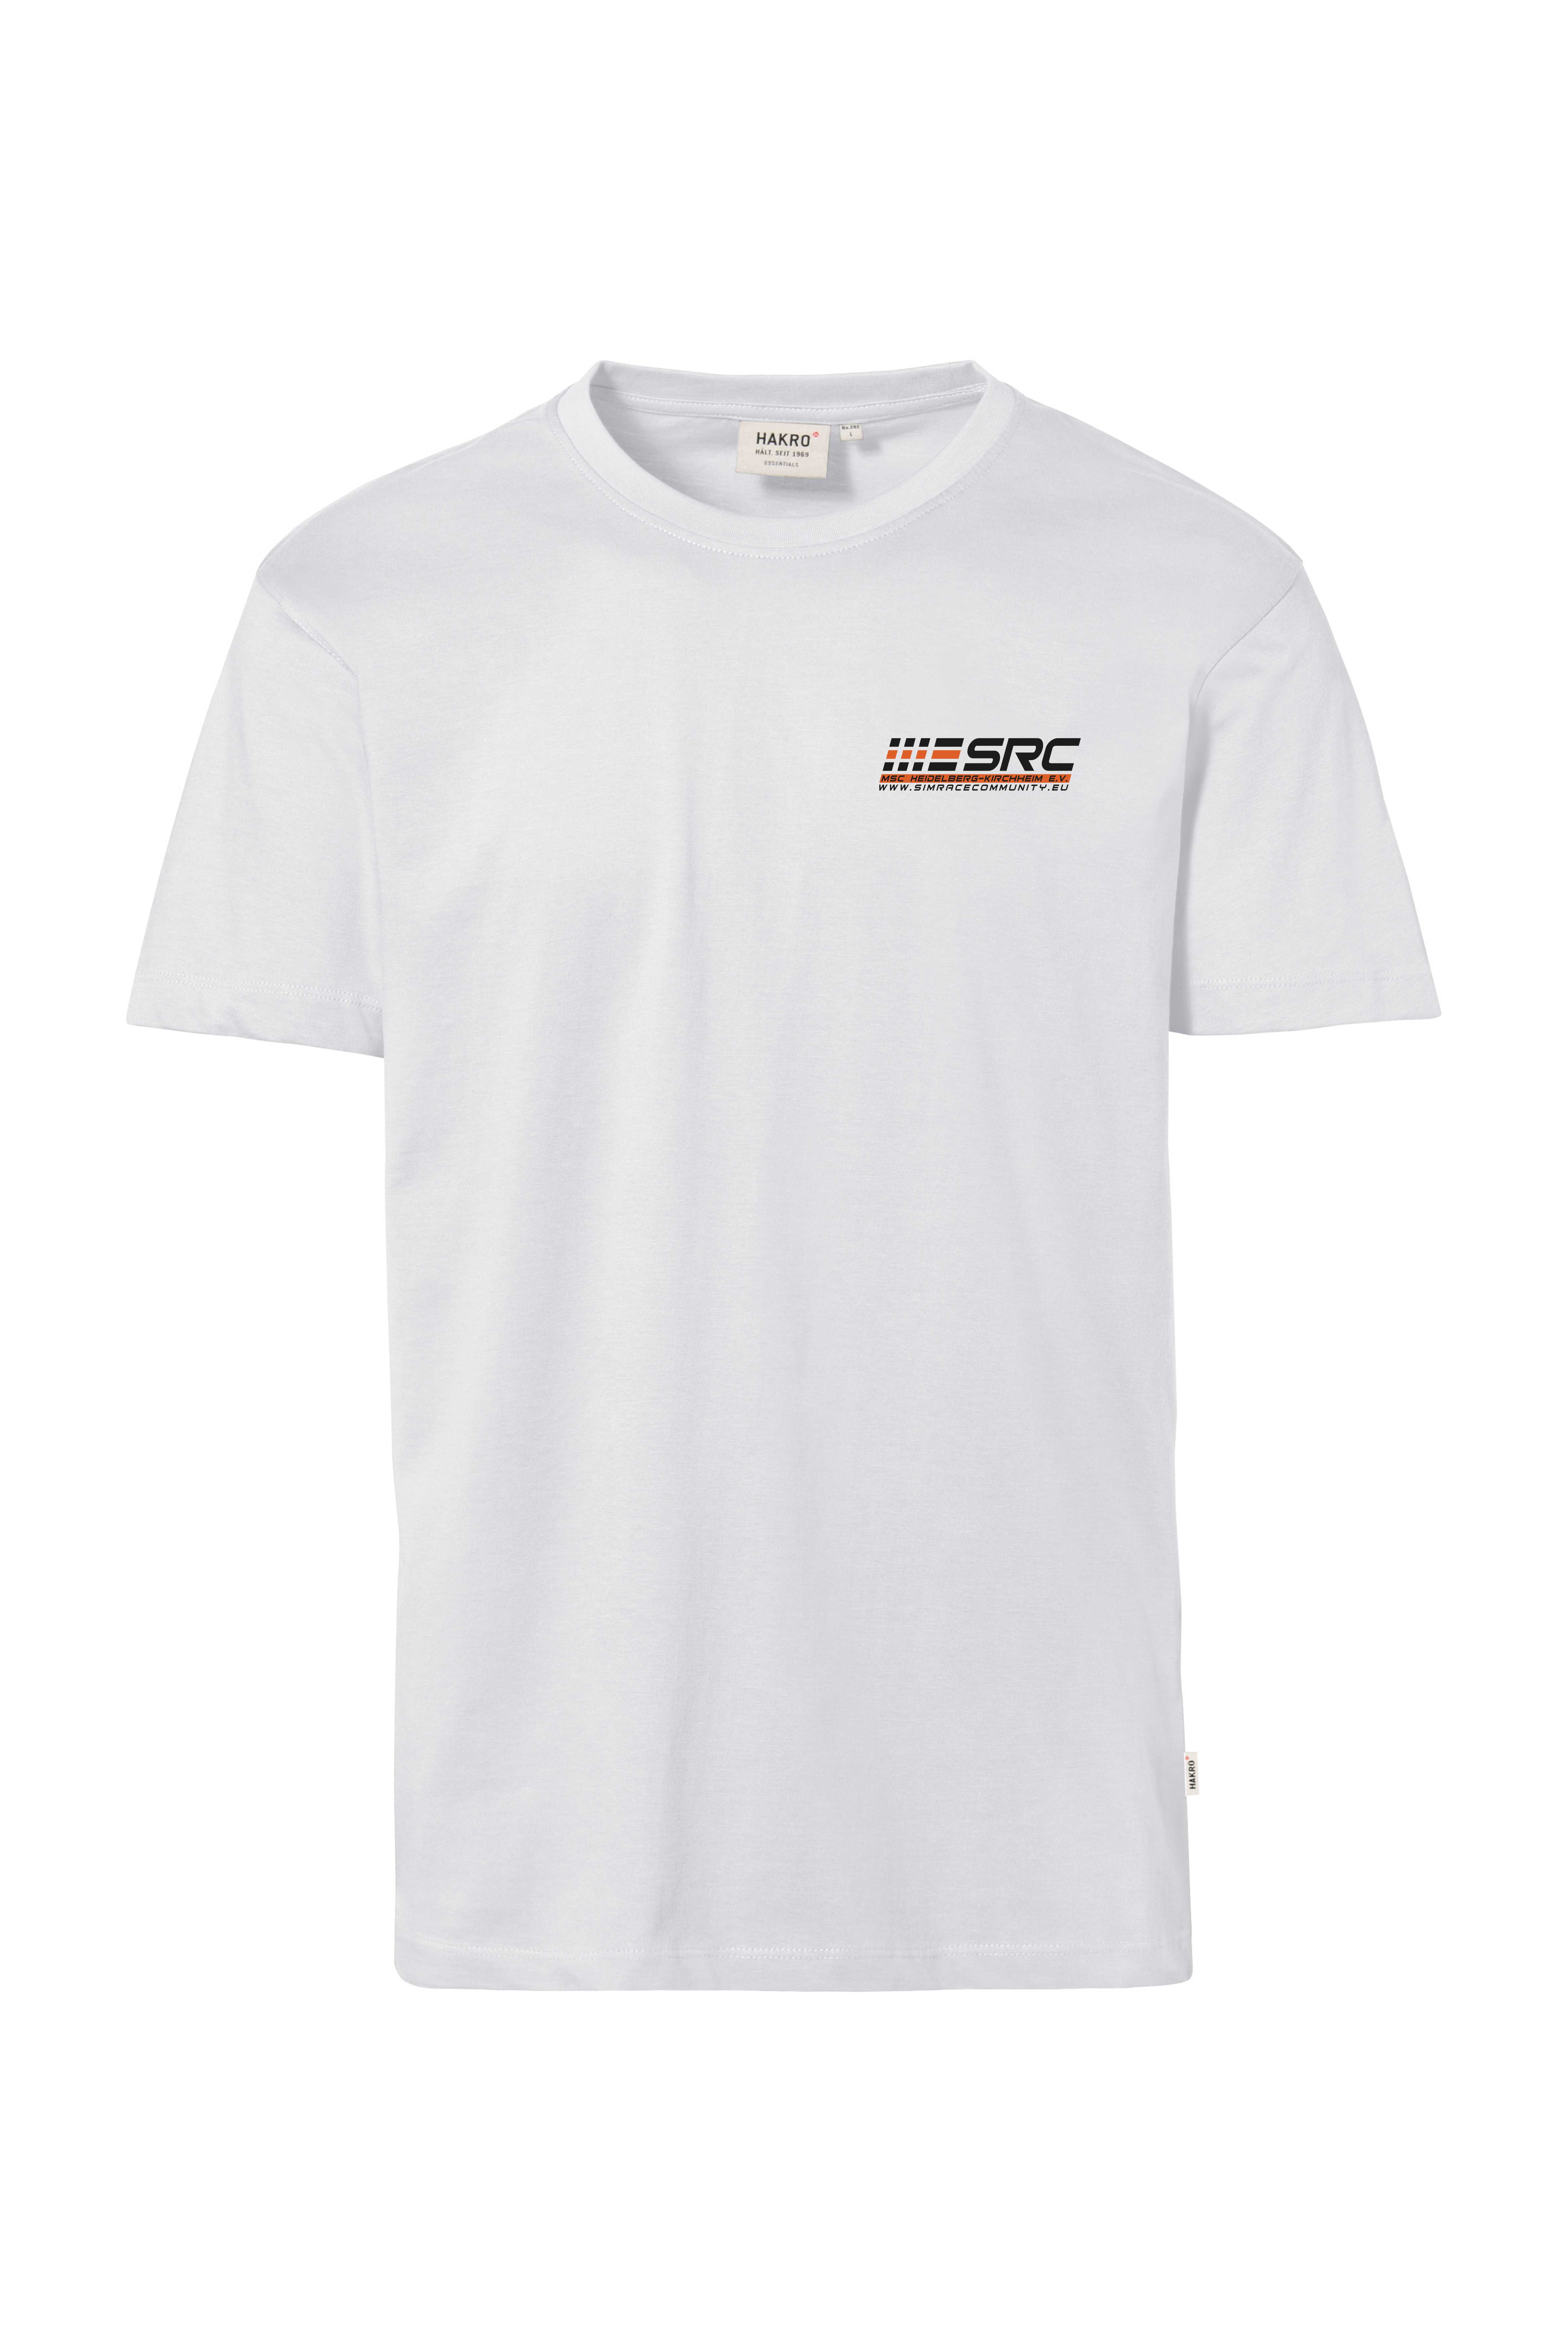 SRC T-Shirt Classic